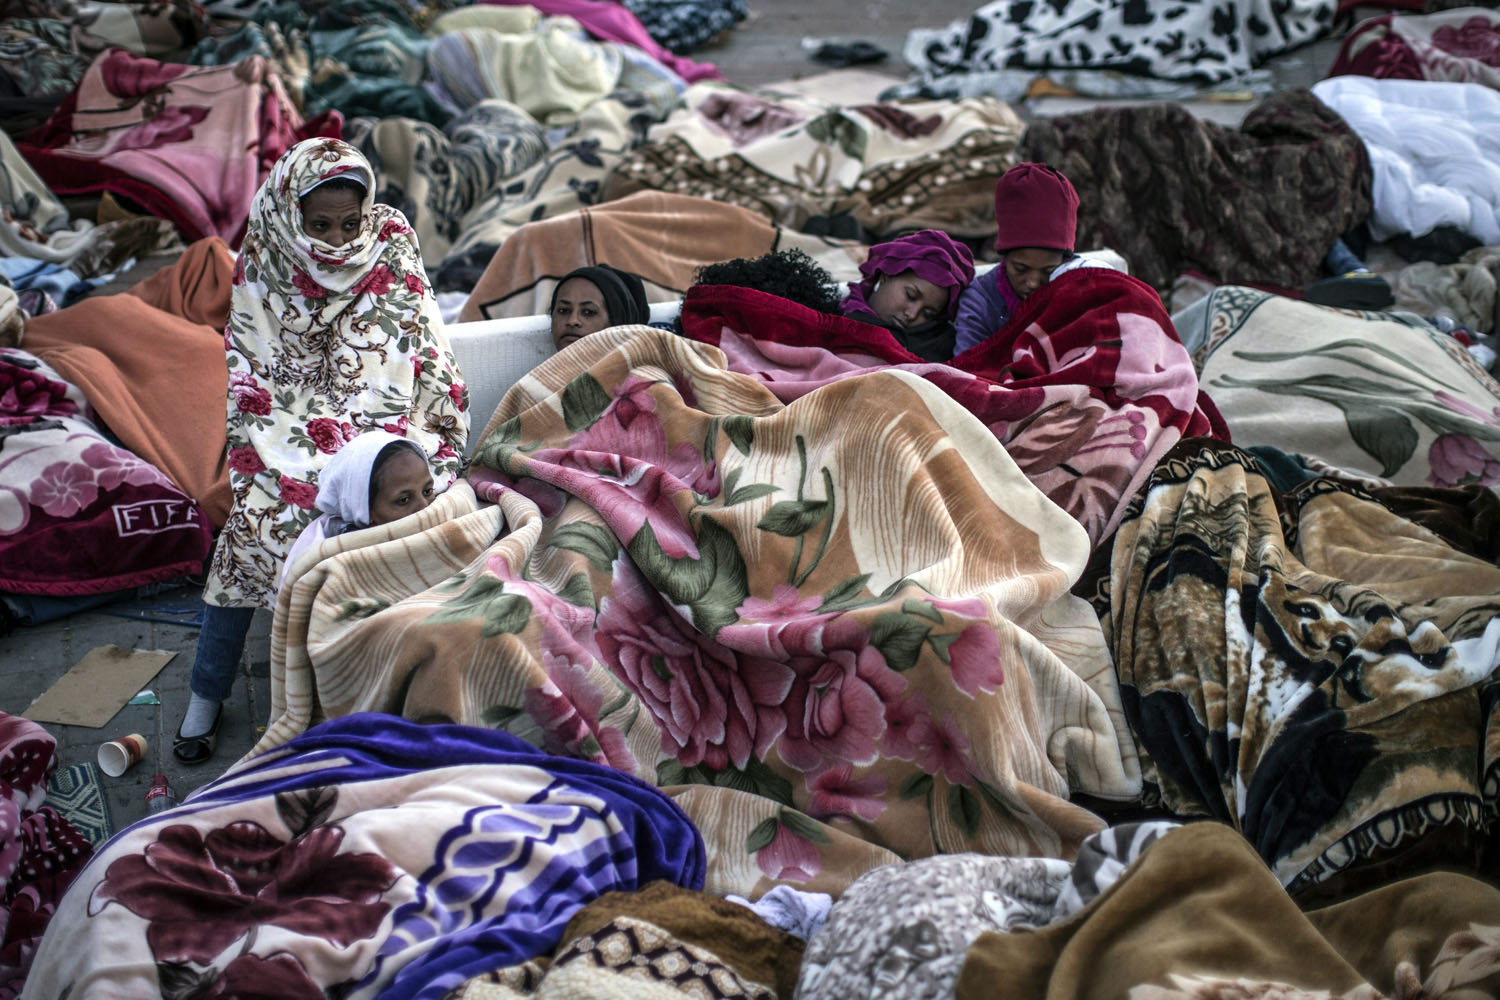 Feb. 5, 2014. Female African asylum seekers sleep on a sofa in Levinski Park, southern Tel Aviv, Israel.